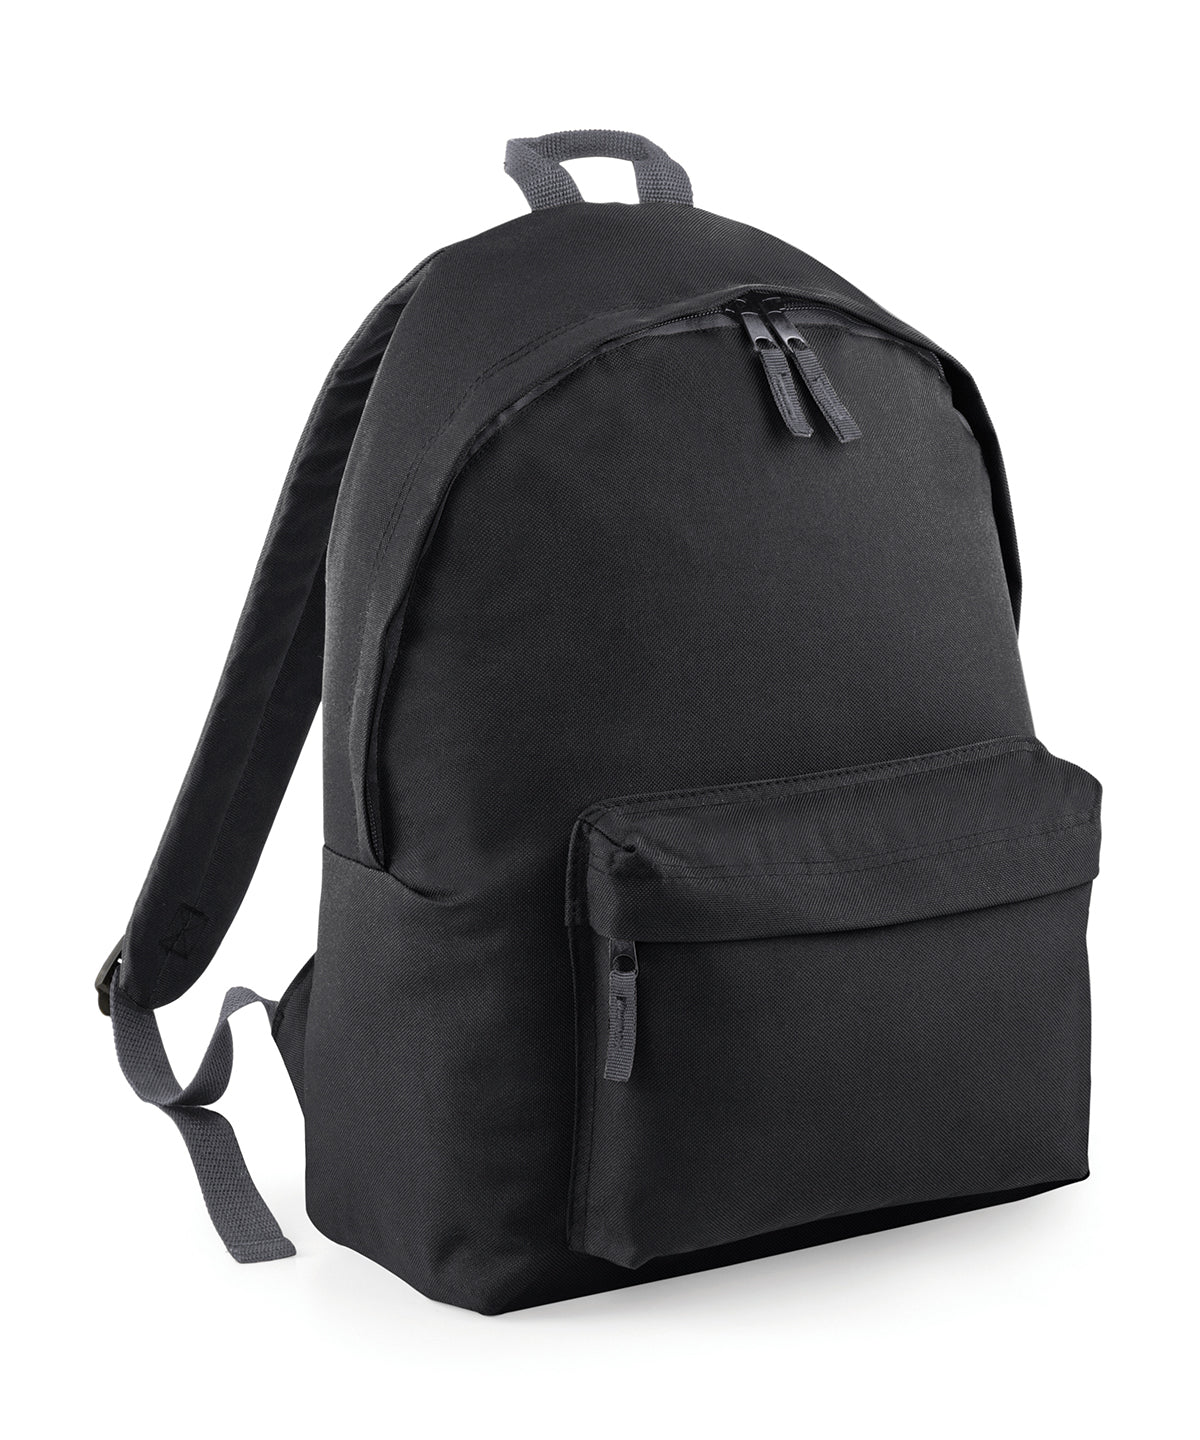 Töskur - Maxi Fashion Backpack